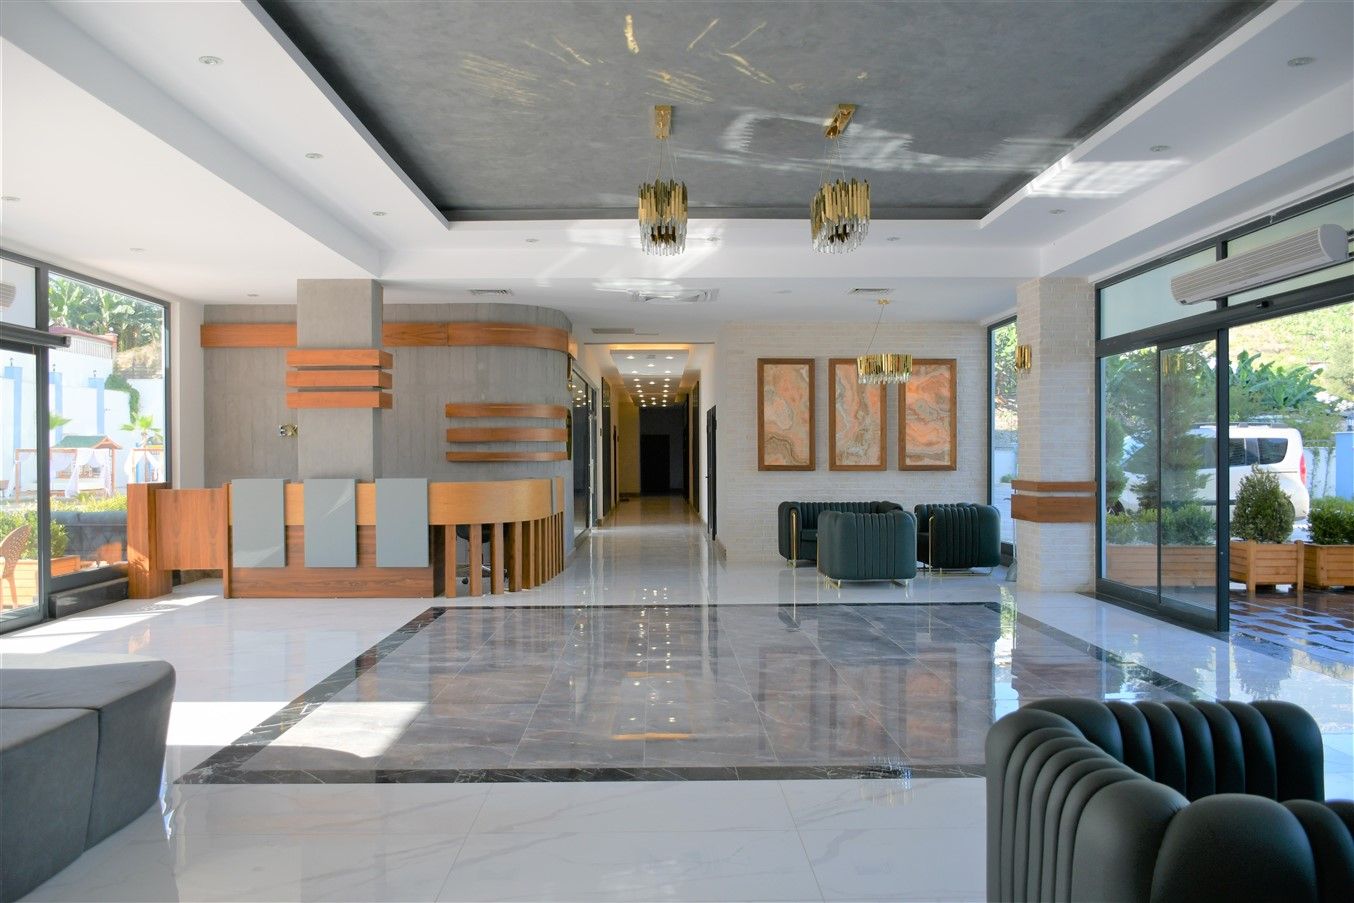 1-bedroom apartment for rent, new comfort class residence in Mahmutlar